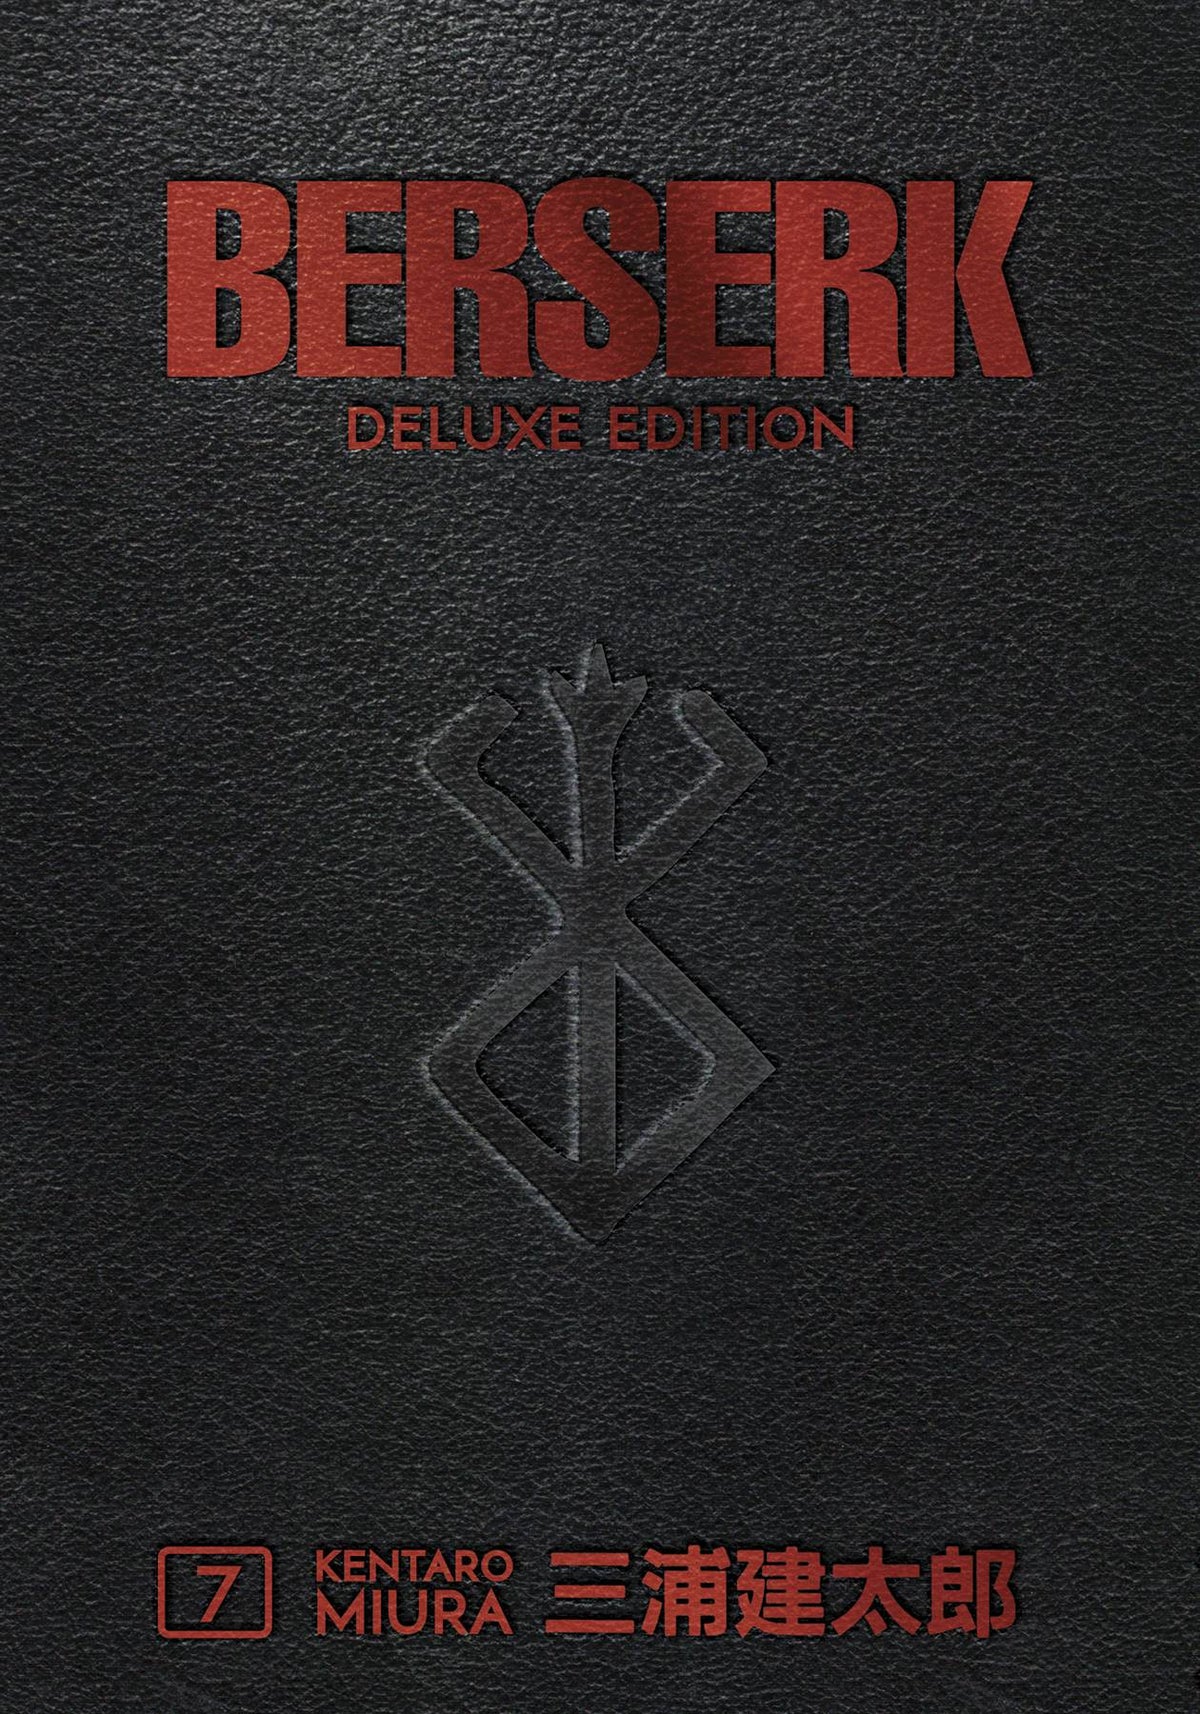 BERSERK DELUXE EDITION HC VOL 07 (MR) - Third Eye